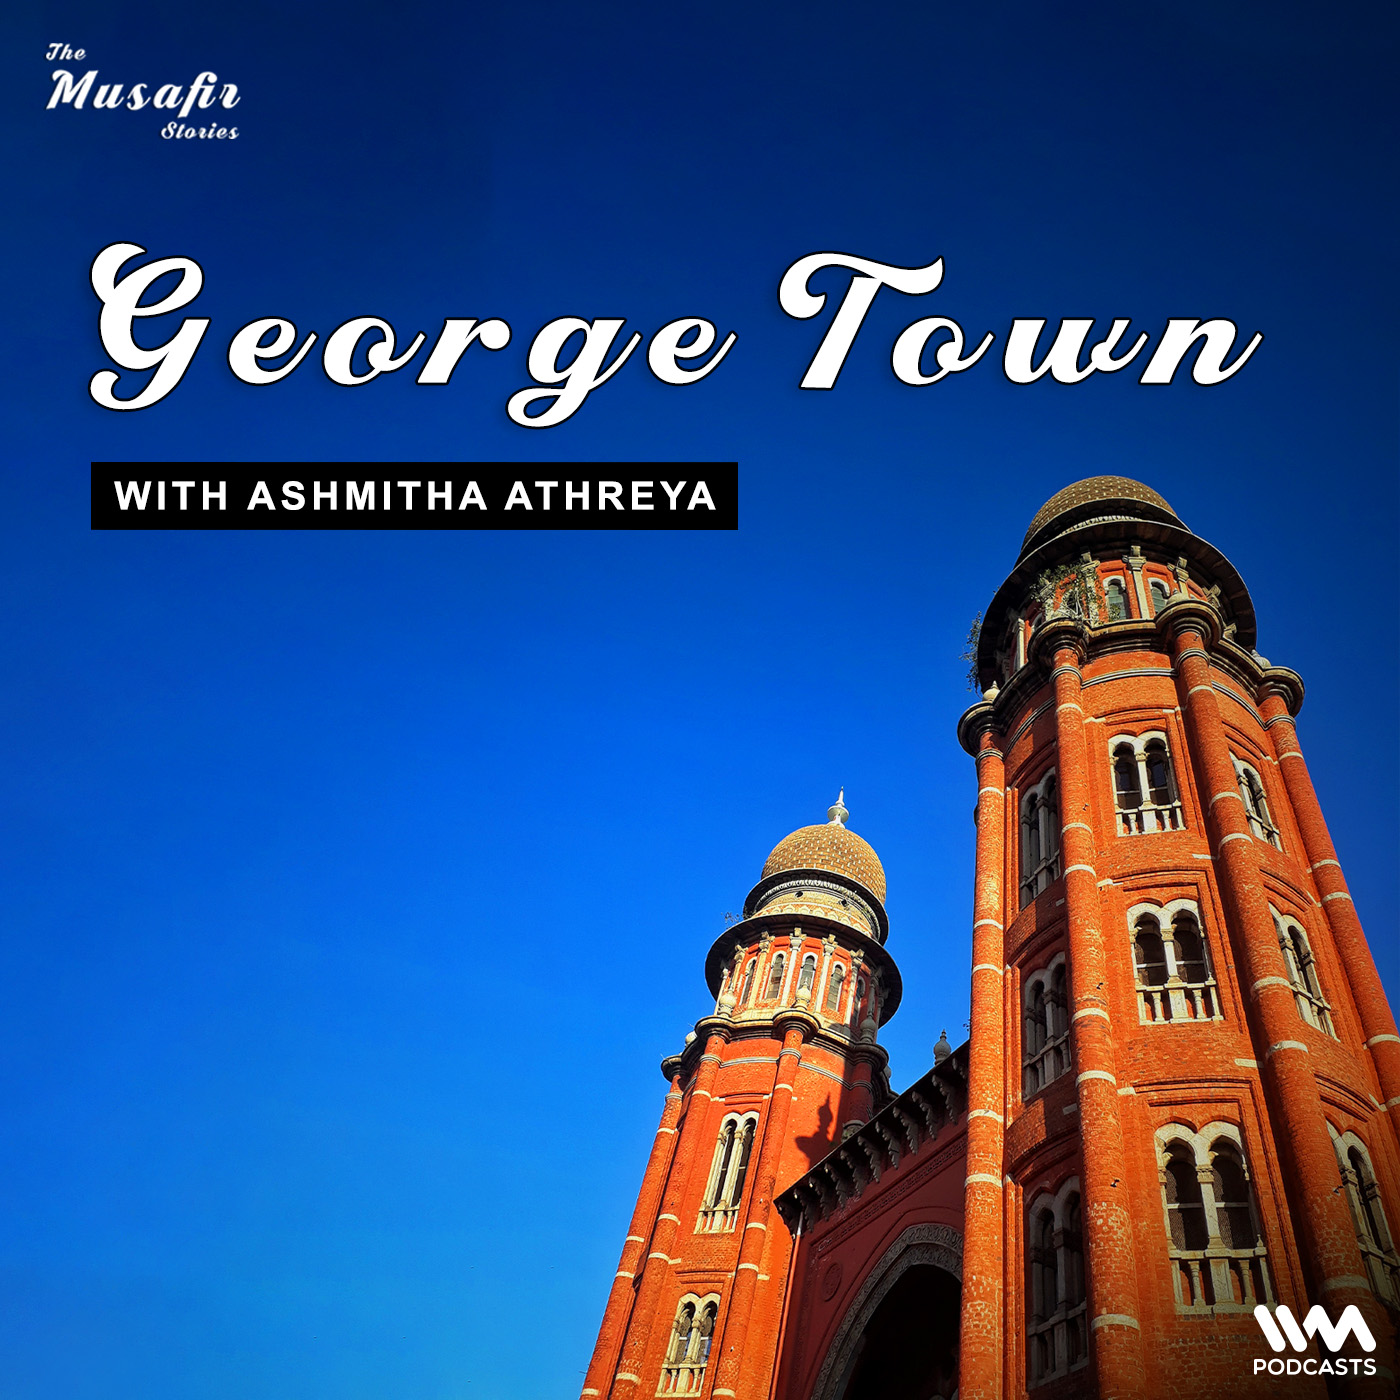 George Town with Ashmitha Athreya